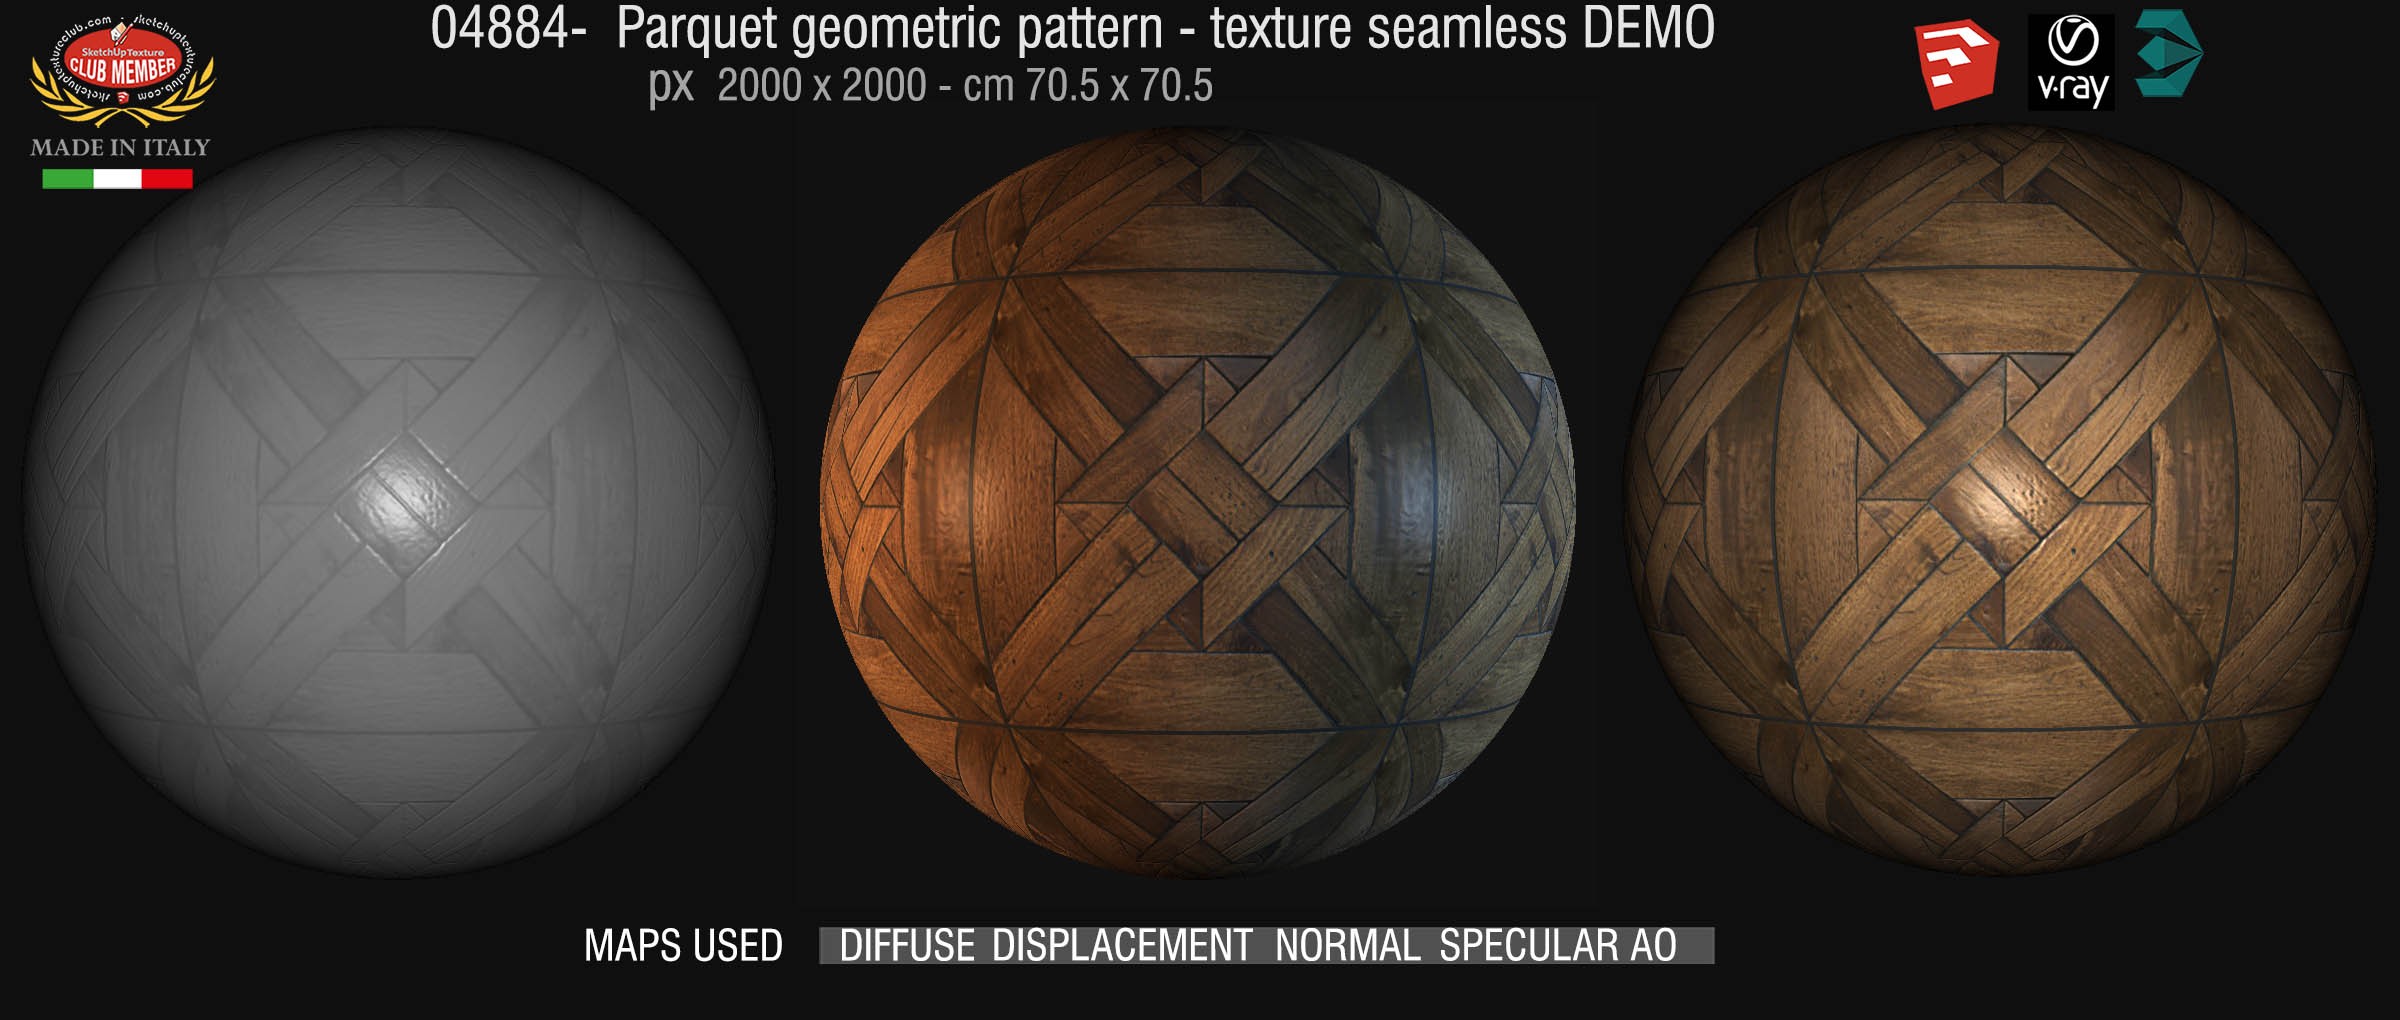 04884 Parquet geometric pattern texture seamless + maps DEMO